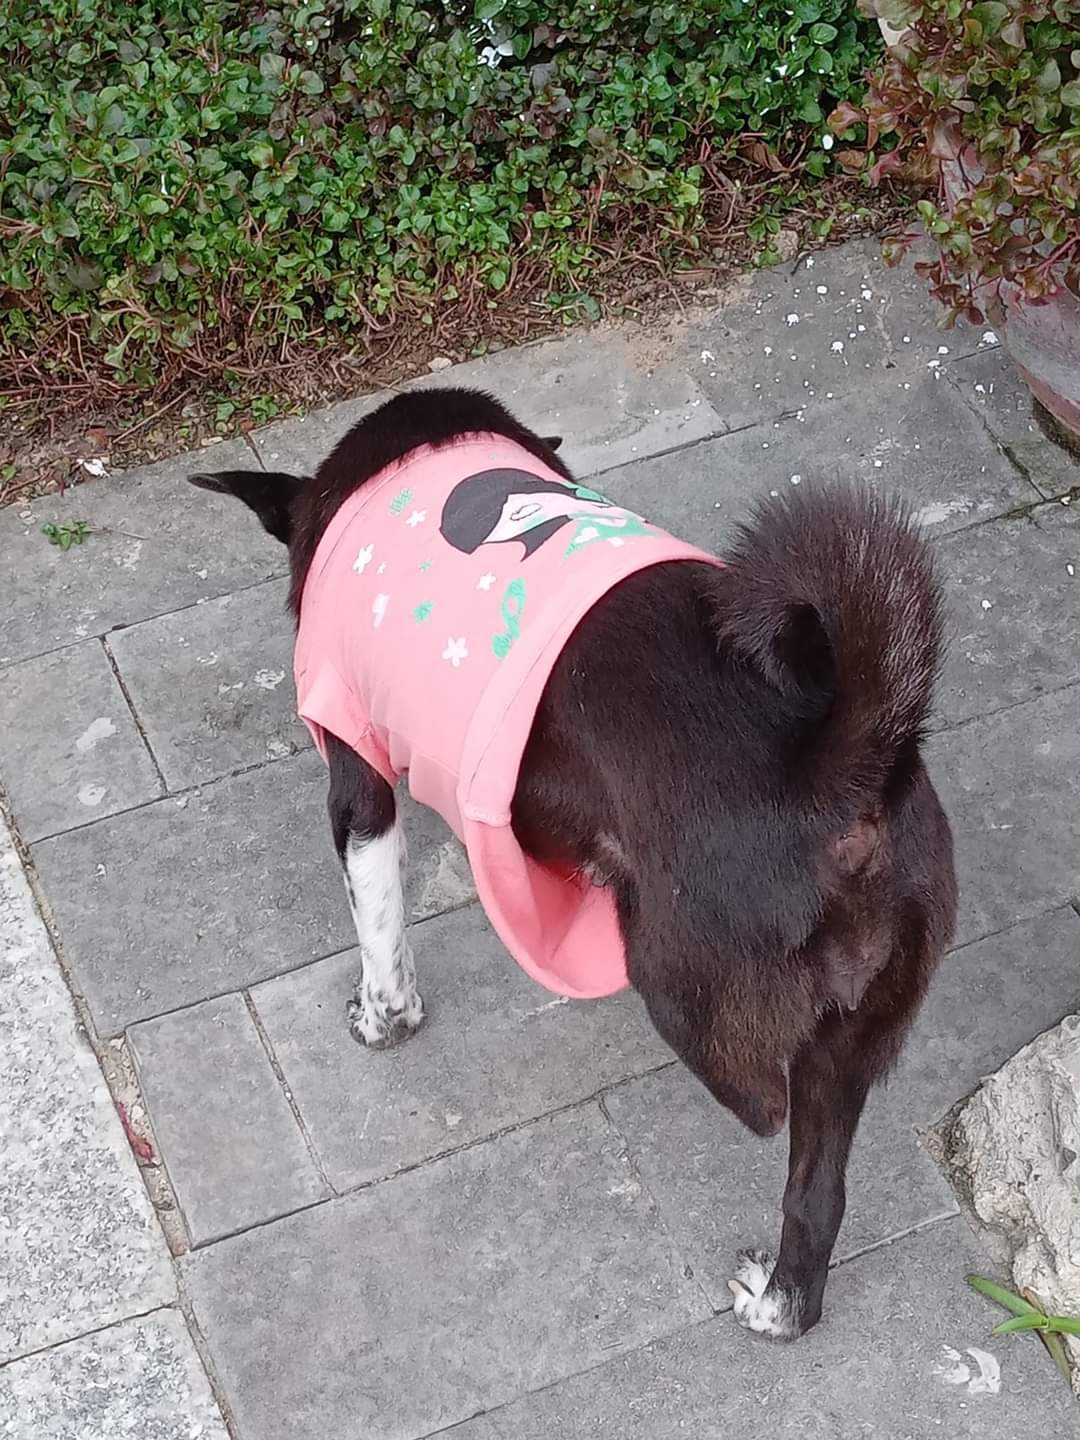 Cute 3 legged dog in Vietnam, wearing a pink t shirt